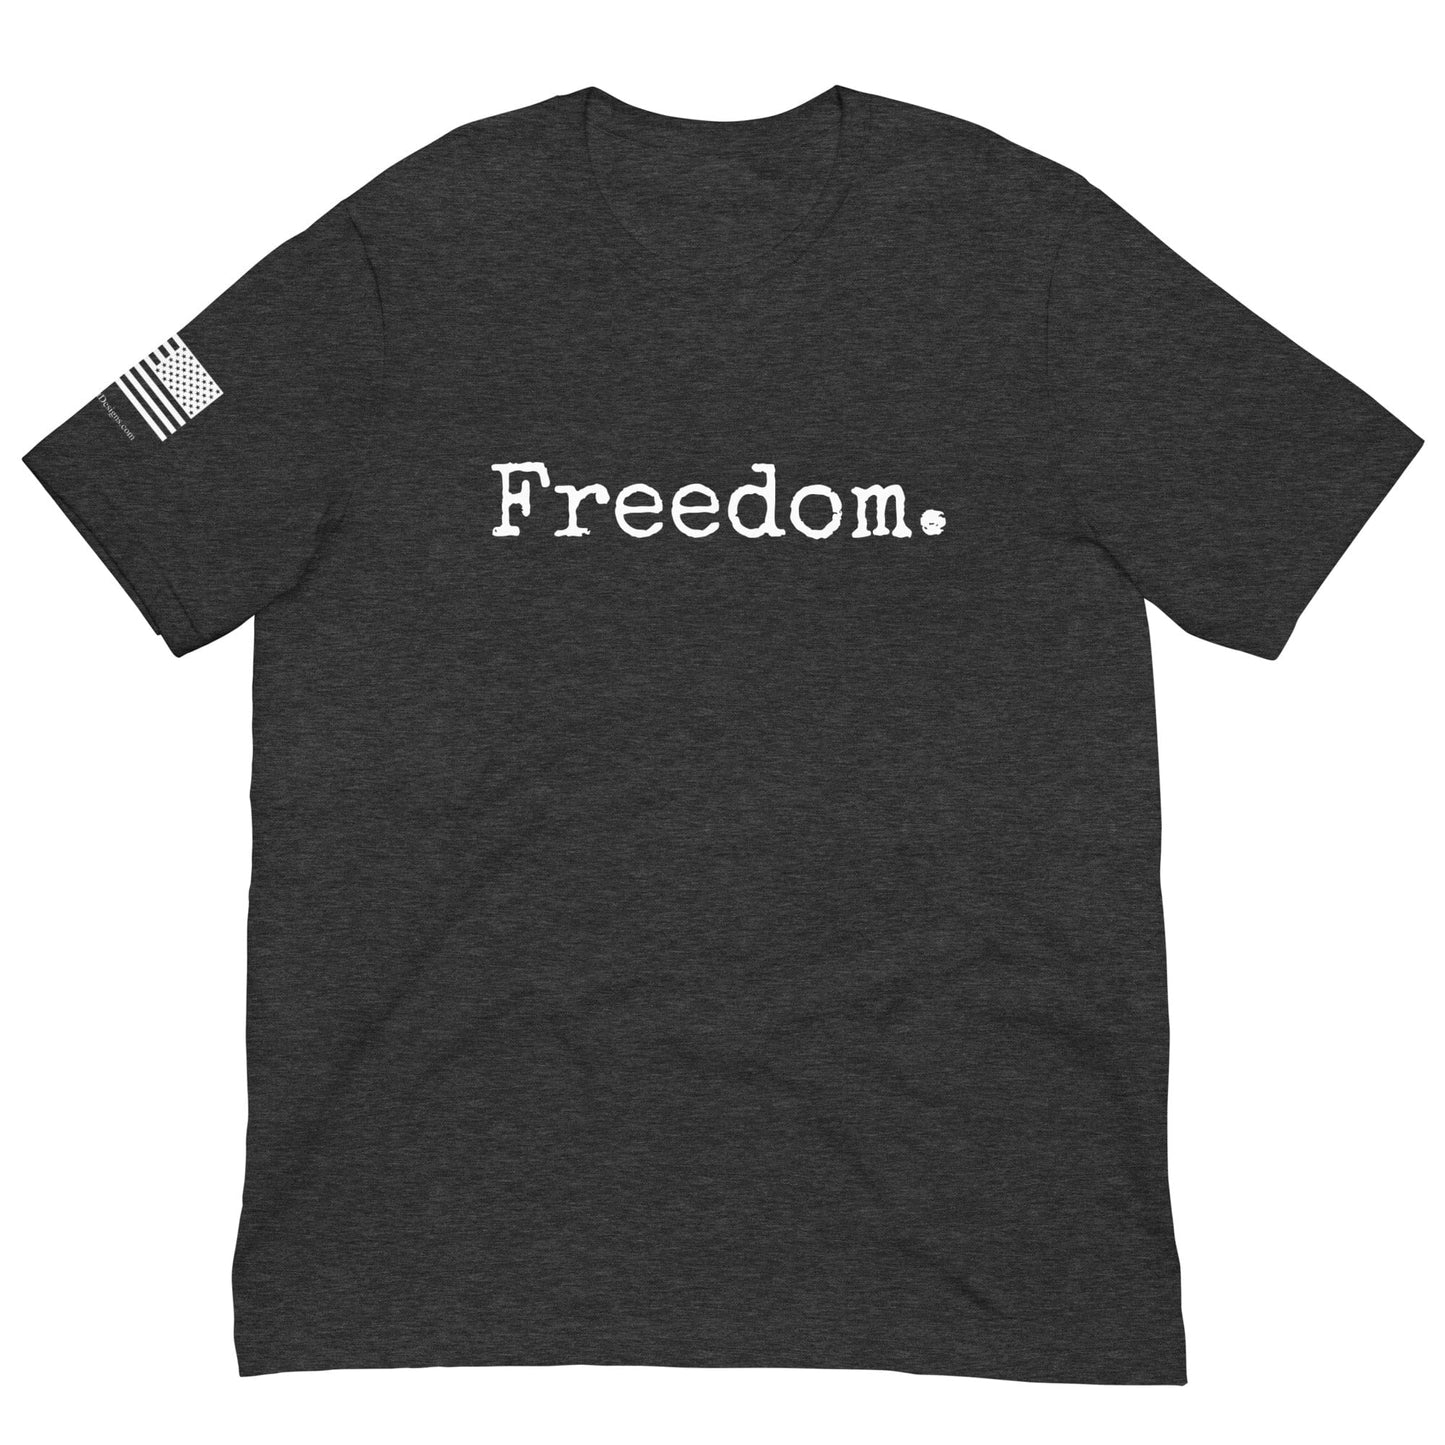 FreedomKat Designs T-Shirt Dark Grey Heather / S Freedom.